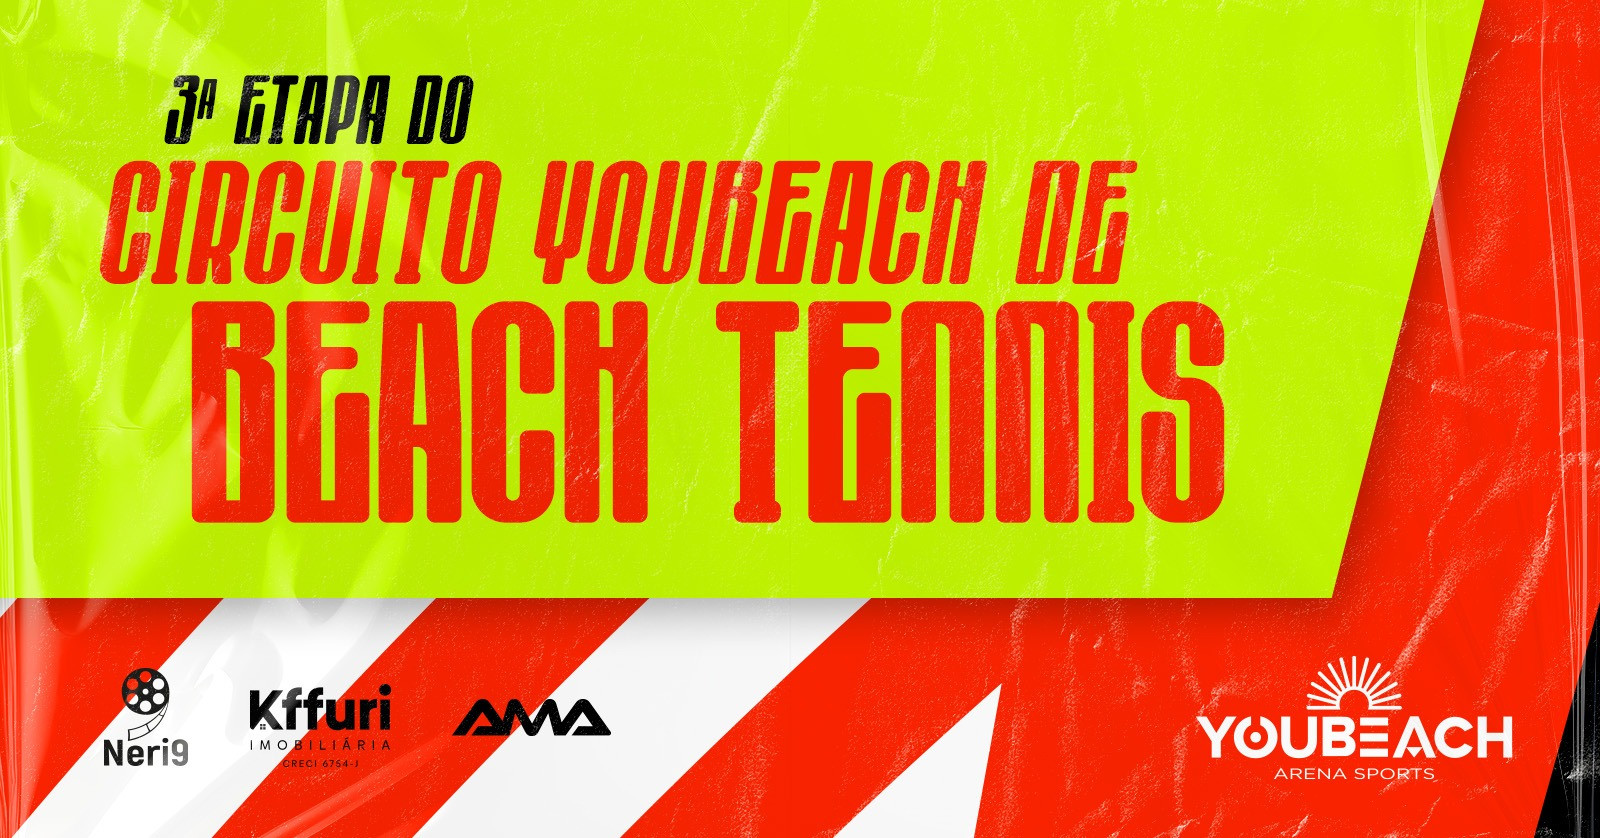 3° Etapa do Circuito Youbeach - Beach Tennis